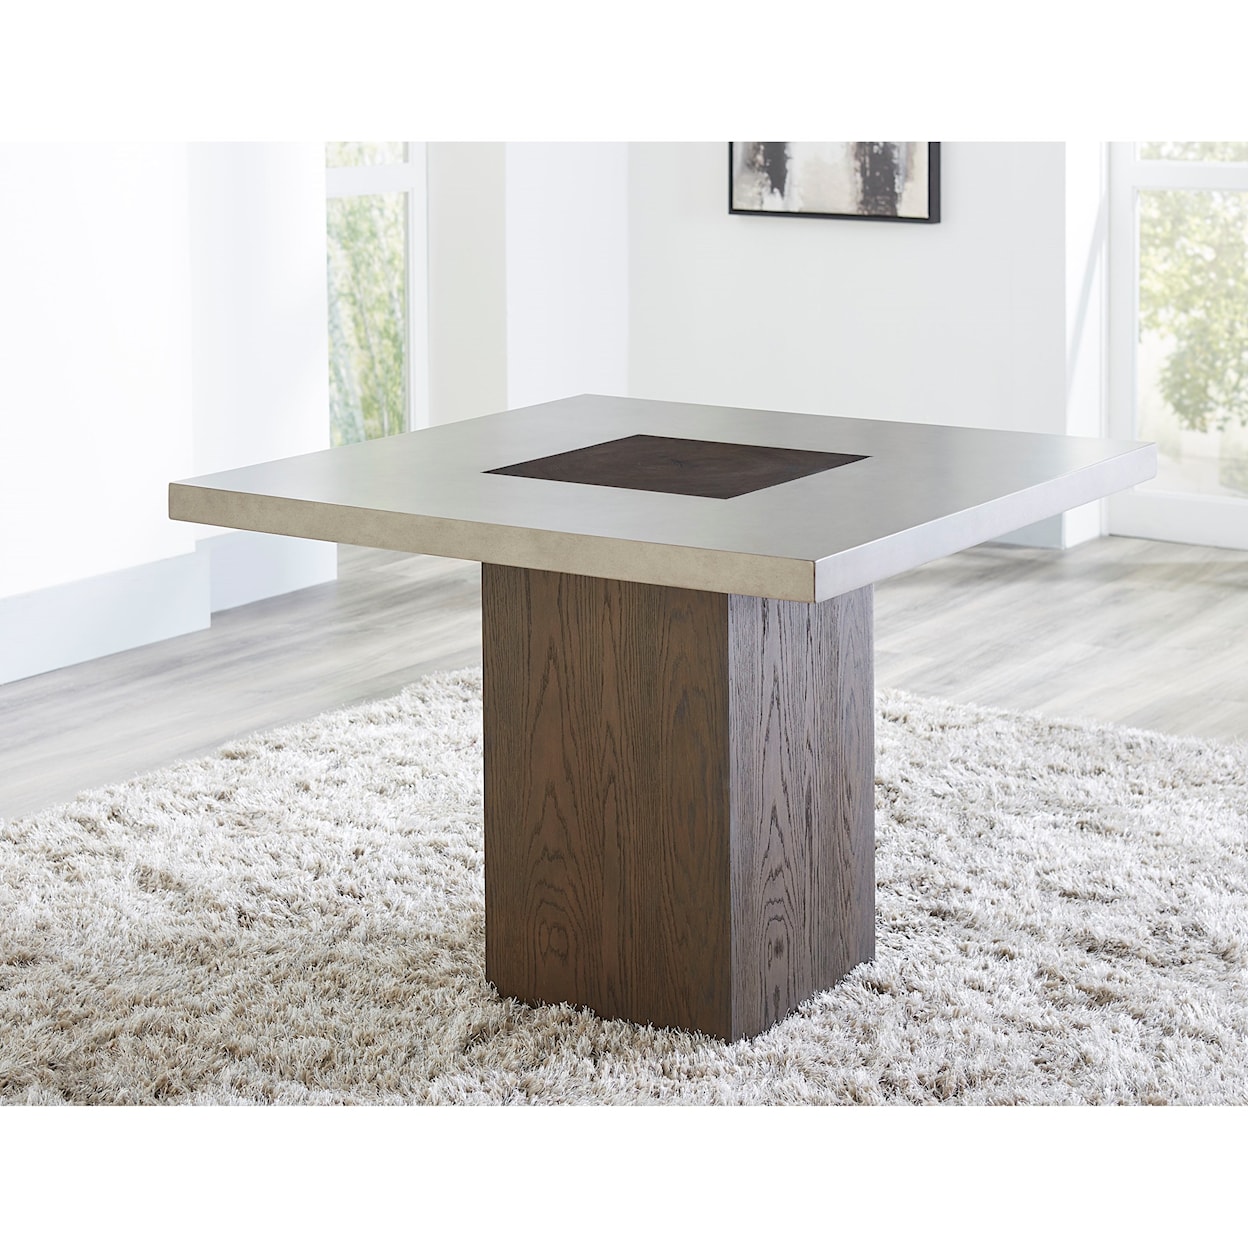 Modus International Modesto Concrete Table in Concrete/French Roast